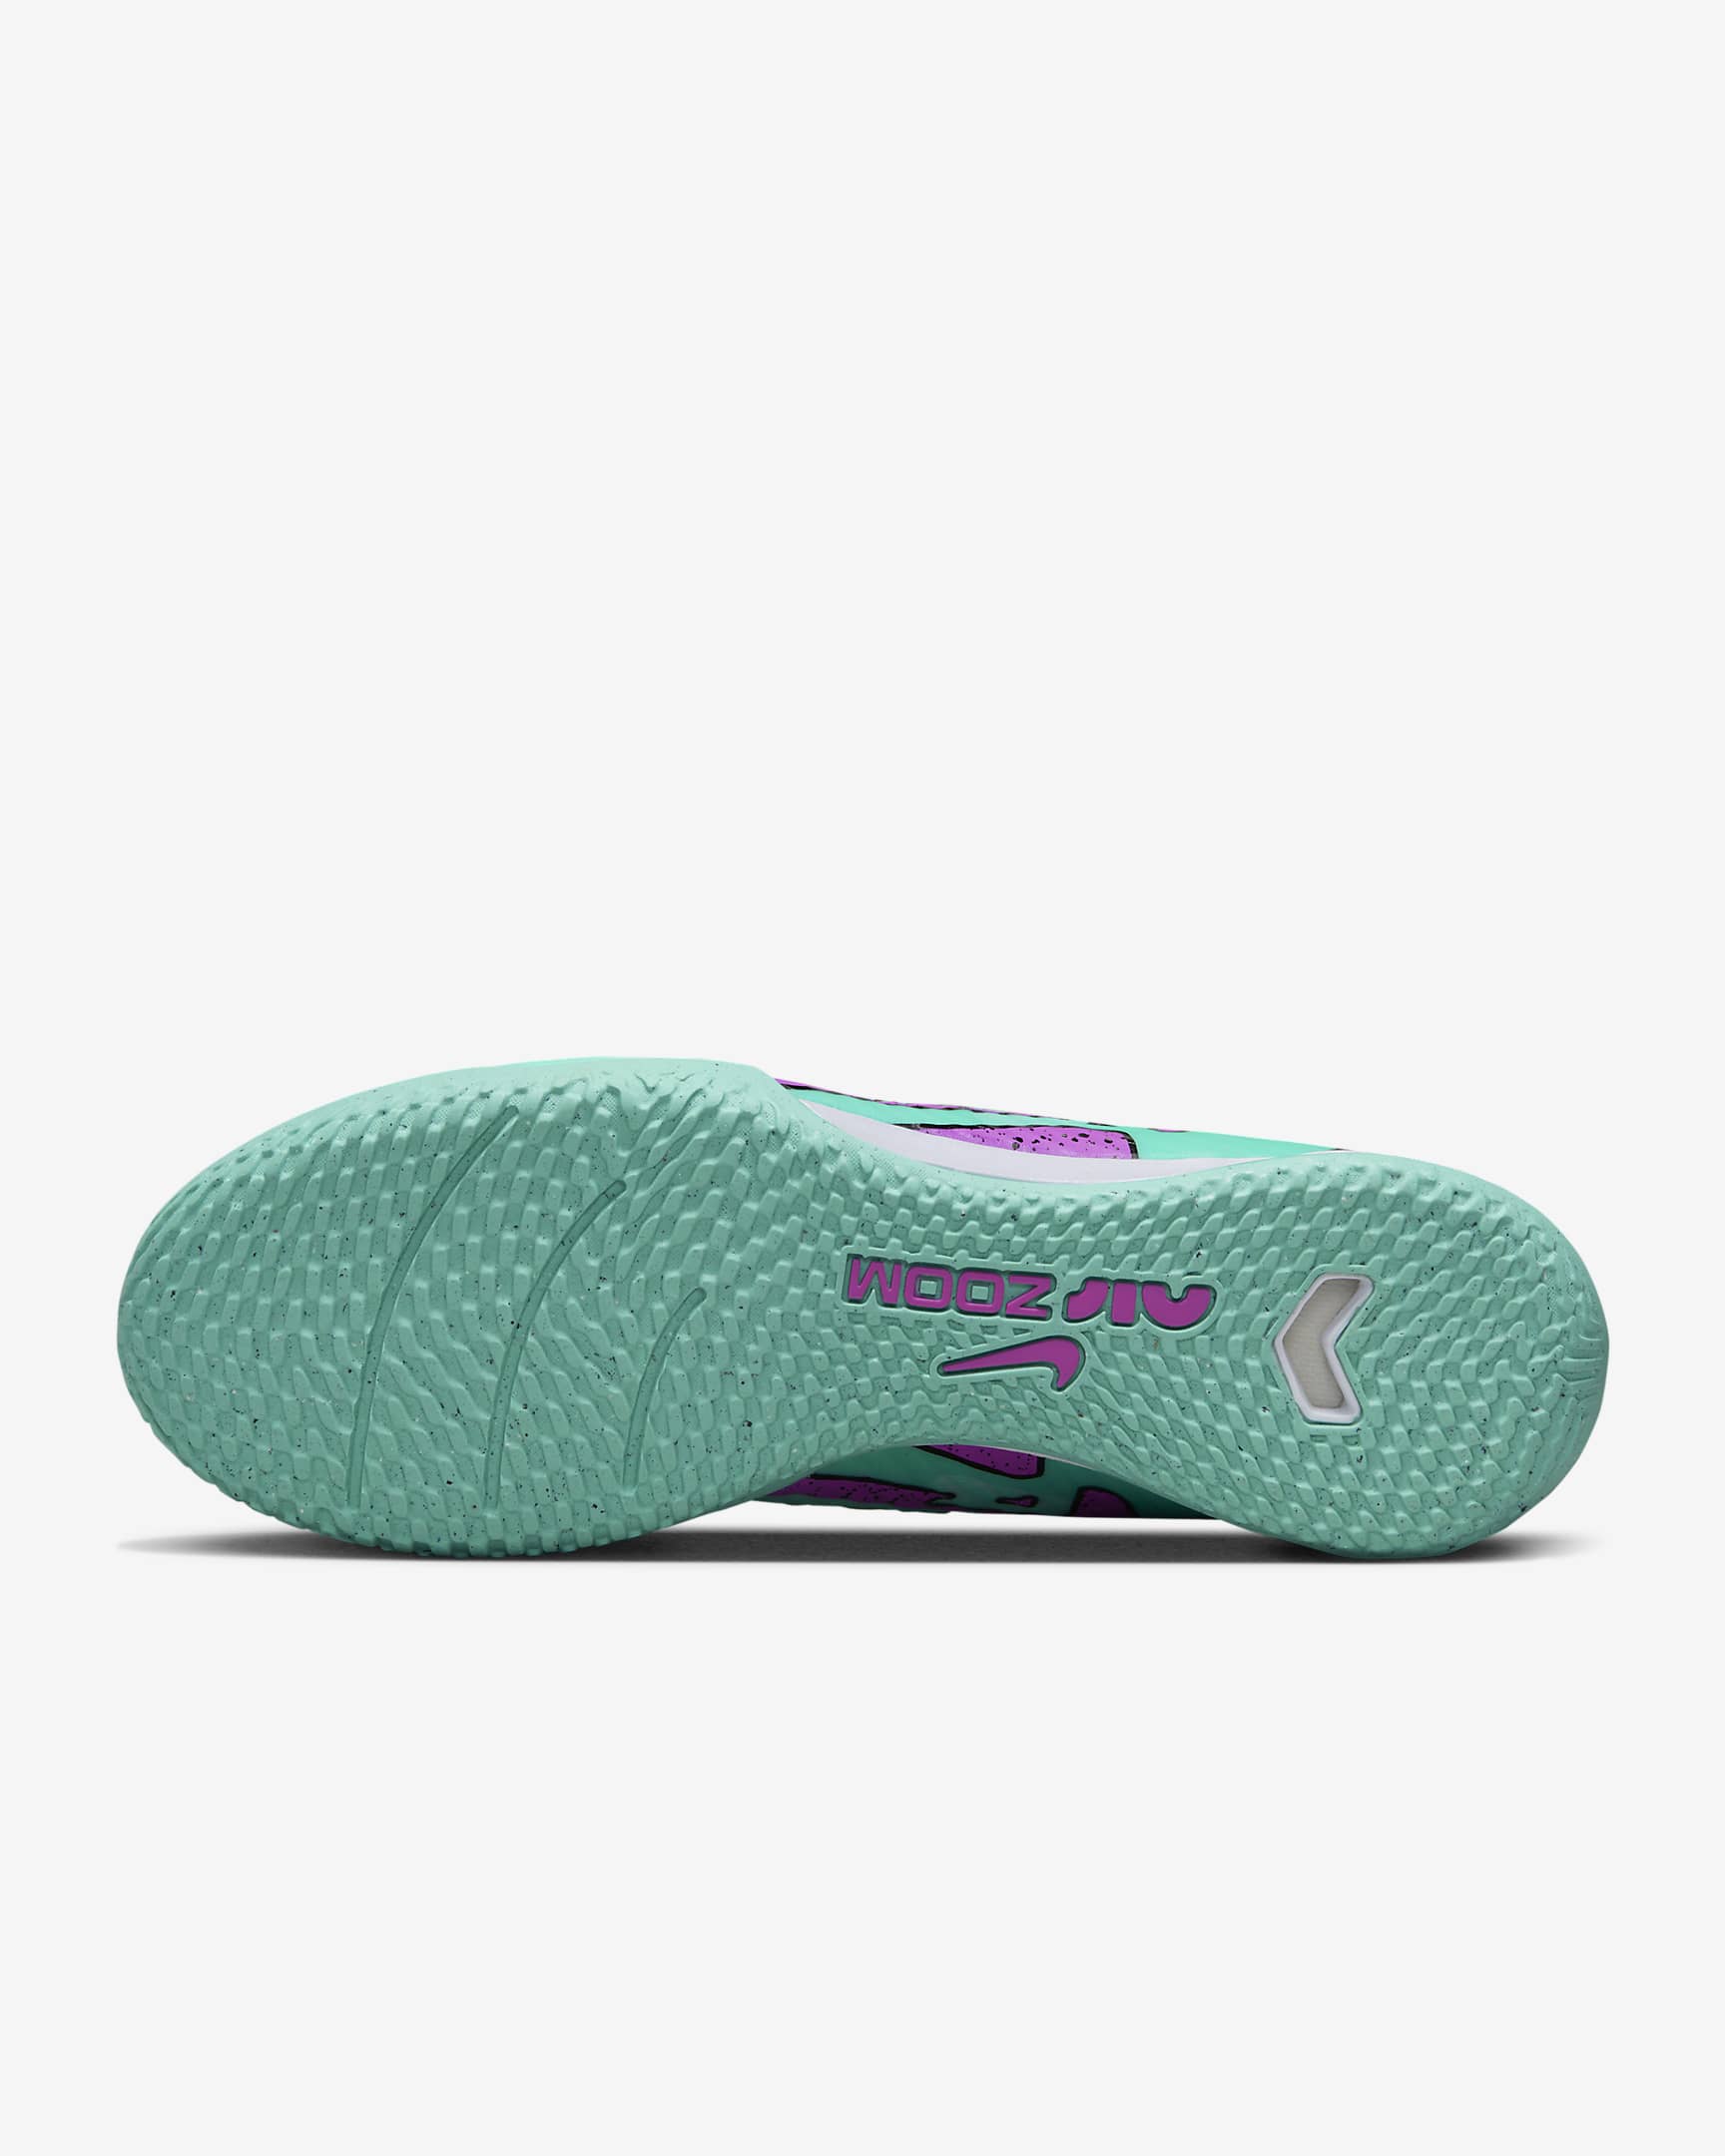 Calzado de fútbol de perfil alto para cancha cubierta Nike Mercurial ...